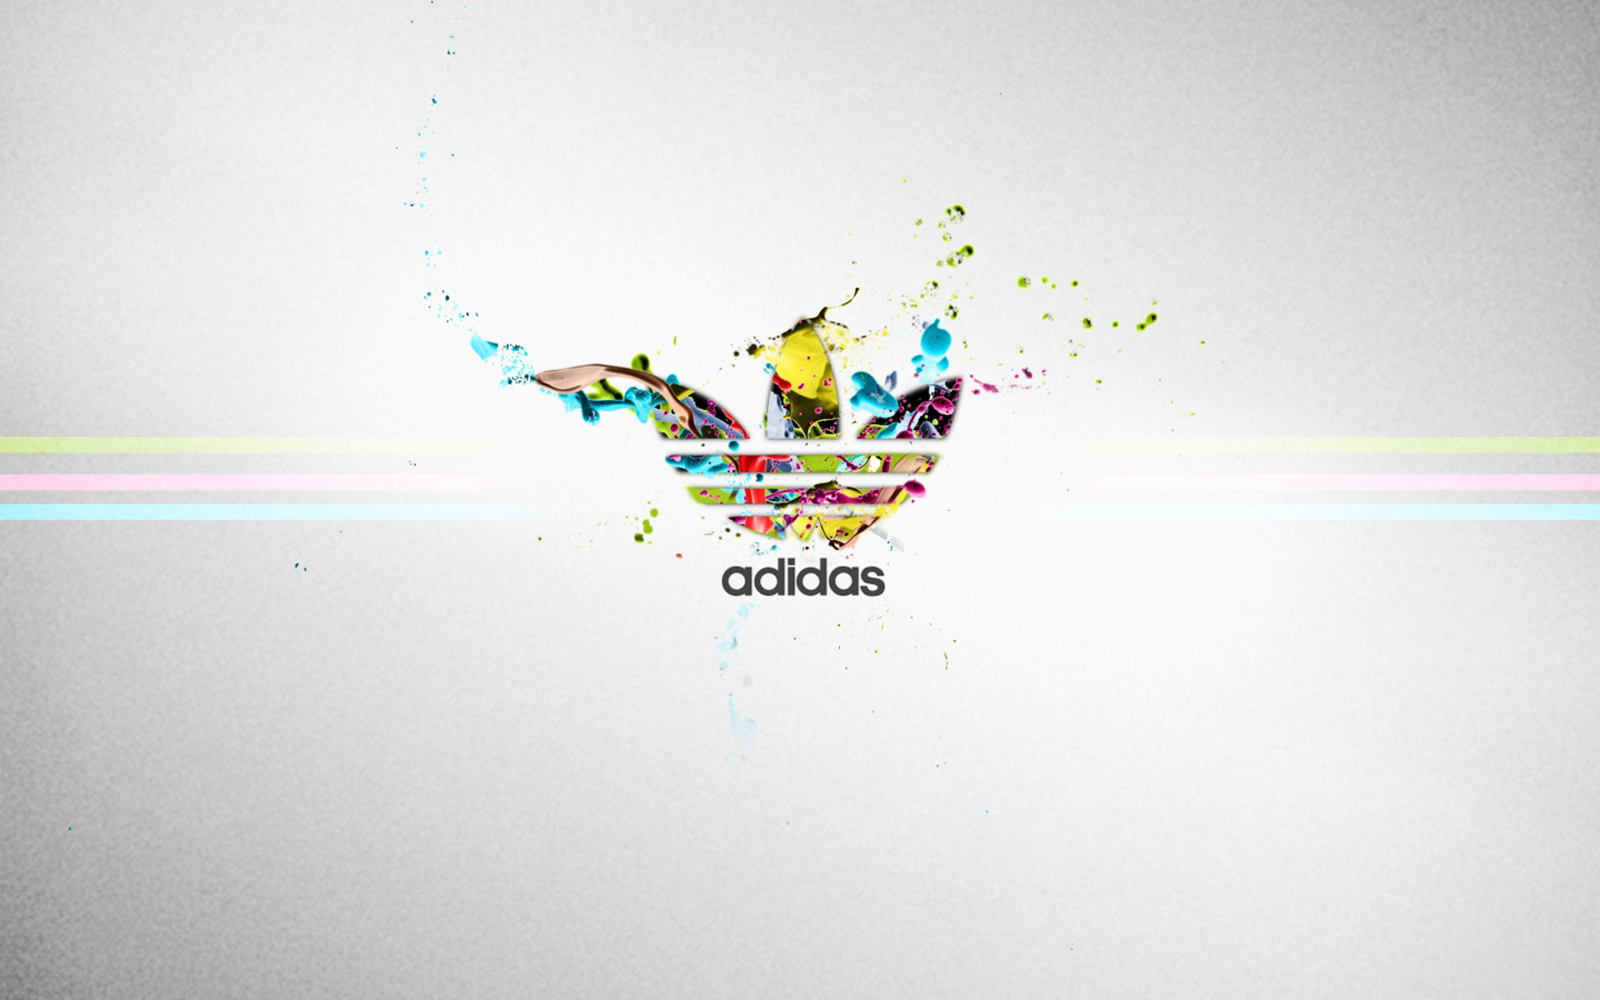 https://blogger.googleusercontent.com/img/b/R29vZ2xl/AVvXsEhSiPWgLBmJJ6kpu6xuCuAqjbi4n9Dgfzvkd3TkTUwOJb2n572rY2lswZNk5DUO2vjPqSlNHcw9Hrb4tI2zY63jh3gK0fJTSEEsKSi5qZbYuQBn5olsW4bPOQDlnlFSJLNuQwMh4FBNei8/s1600/Adidas_Logo_Colorful_Paints_HD_Wallpaper-Vvallpaper.Net.jpg